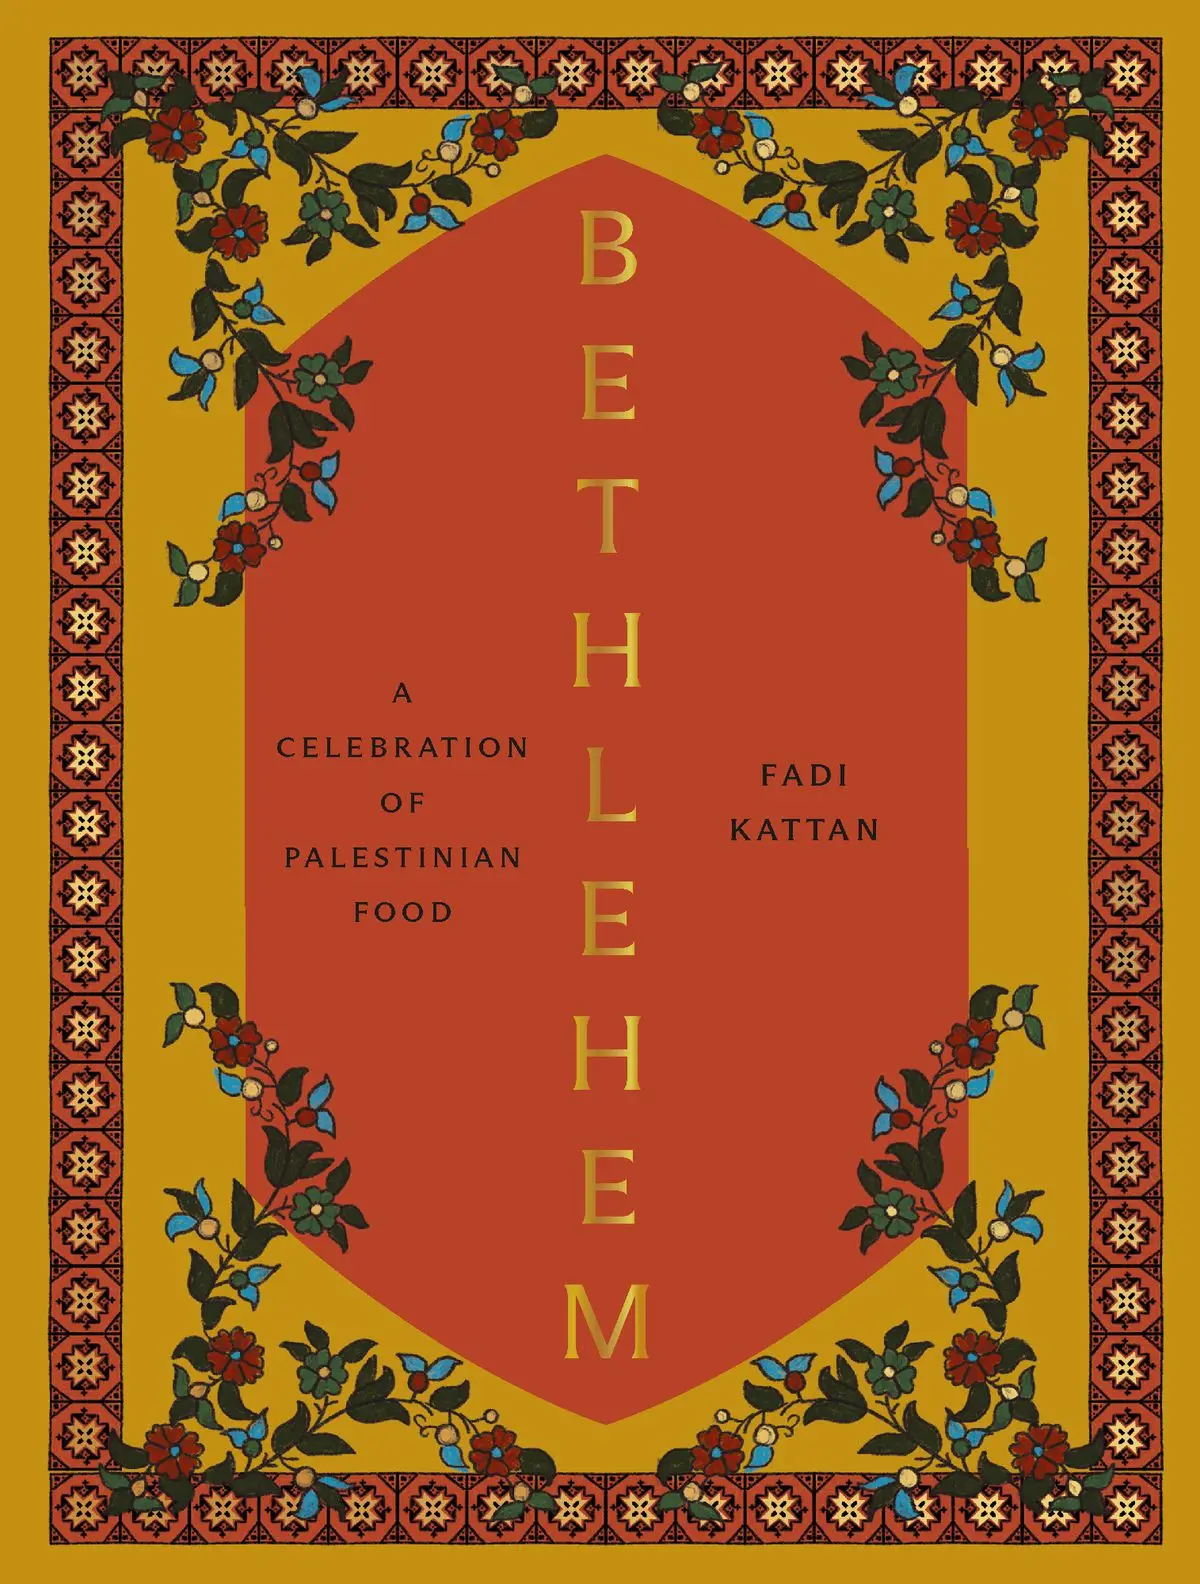 The cover of Bethlehem